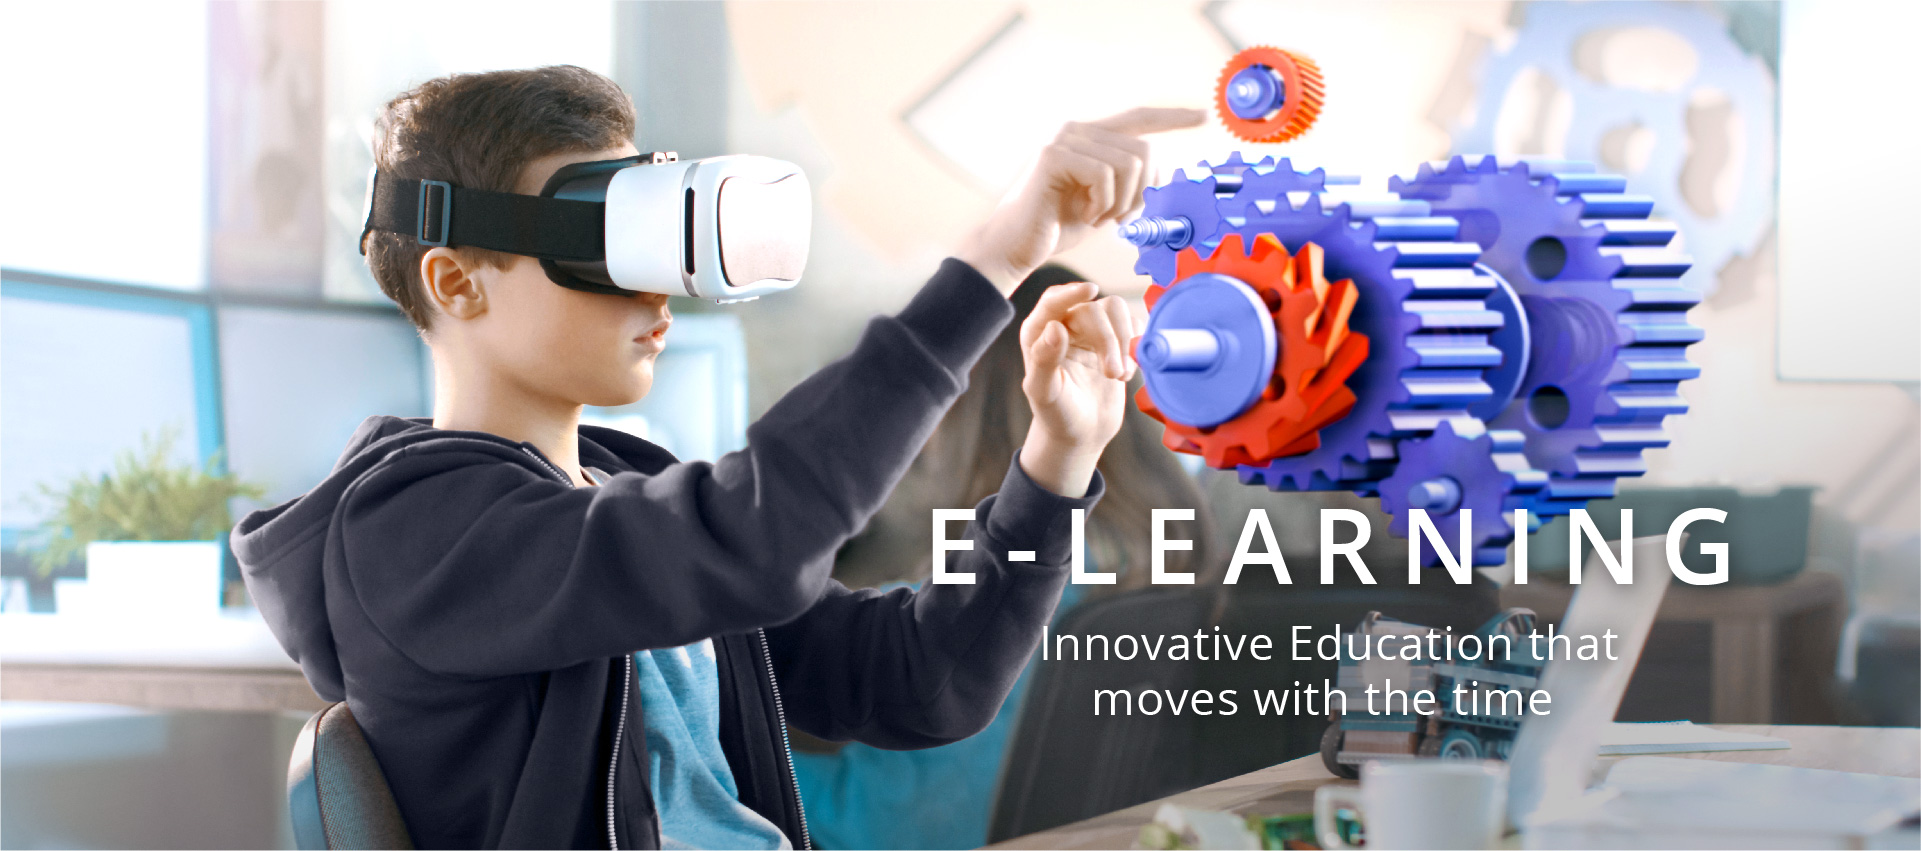 E-LEARNING 與時並進・創新教學